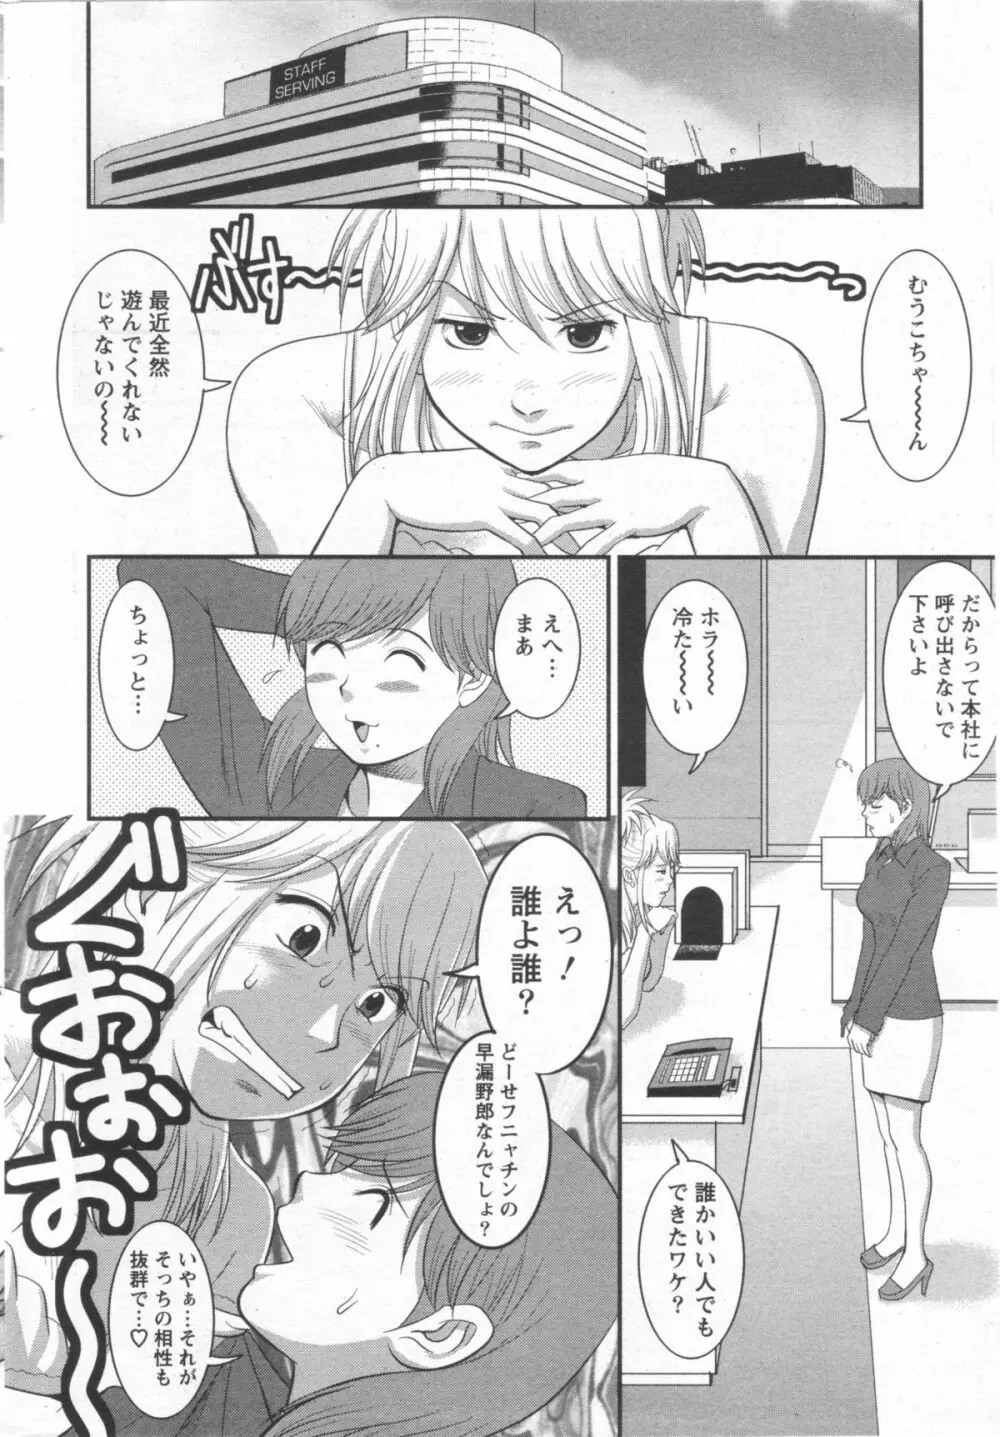 Haken no Muuko-san 10 7ページ